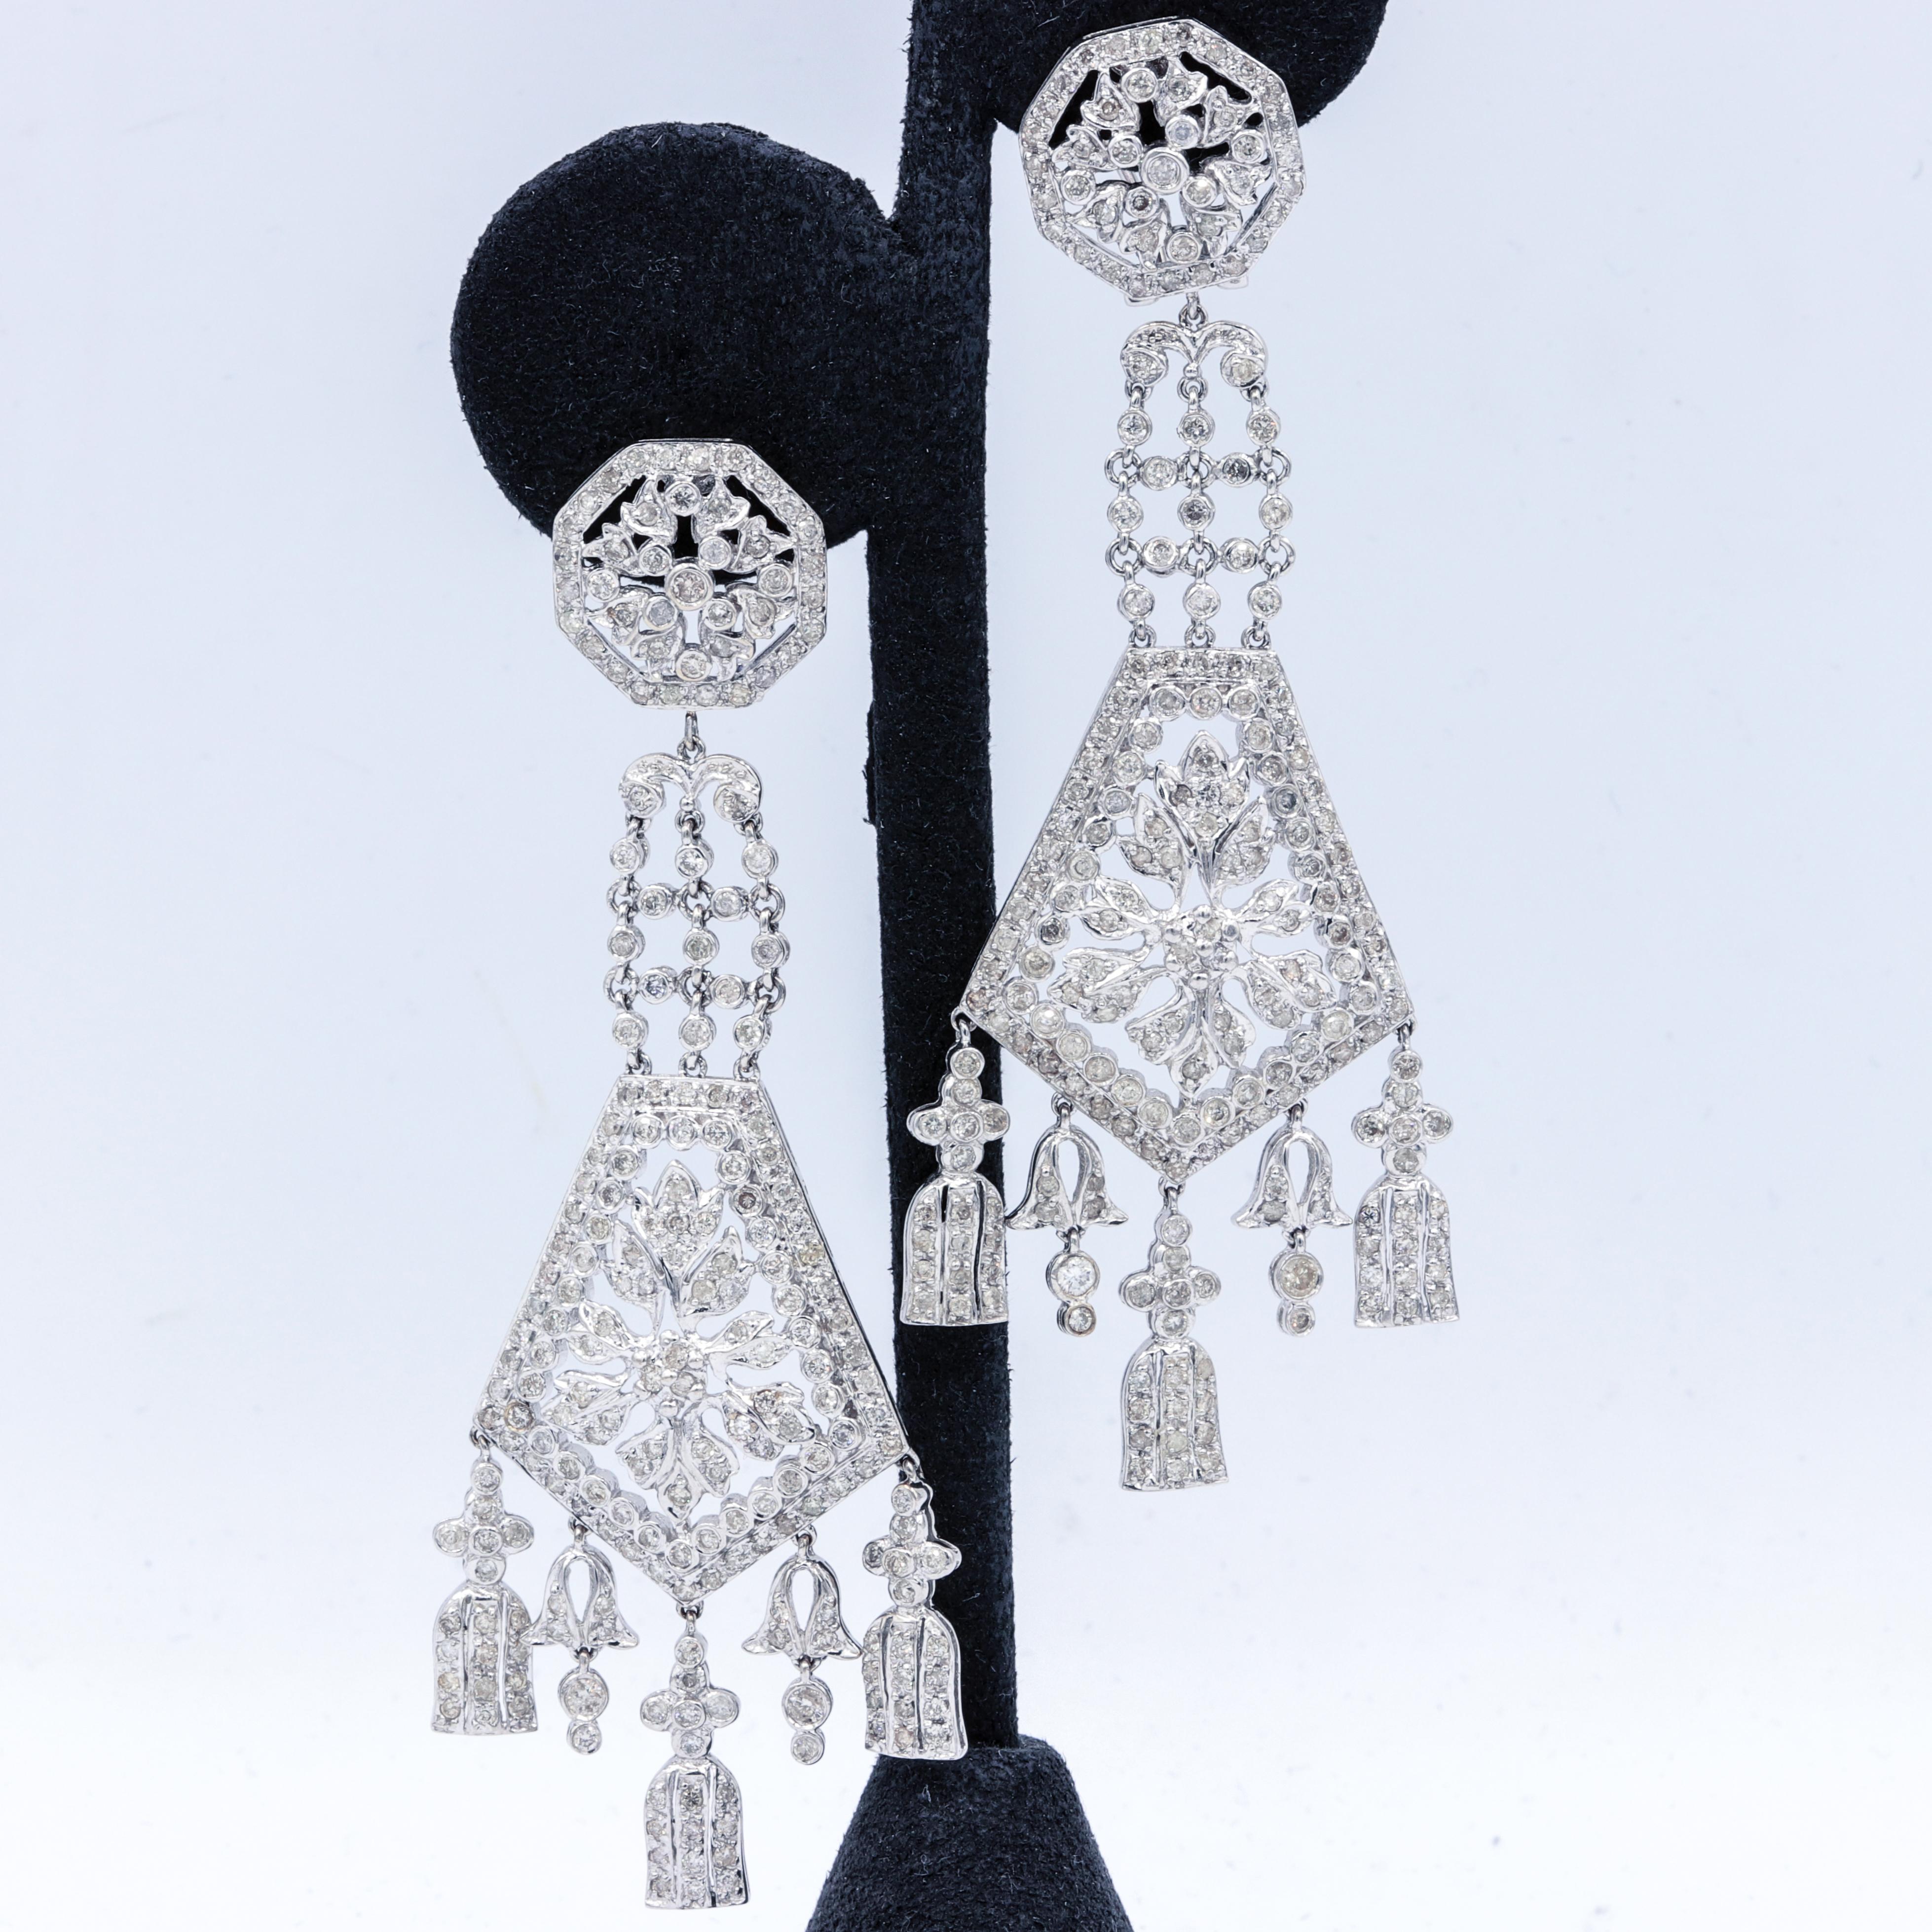 The Art Deco Edge.
14K White gold deco long chandelier earrings, features 7.00 ct round diamonds